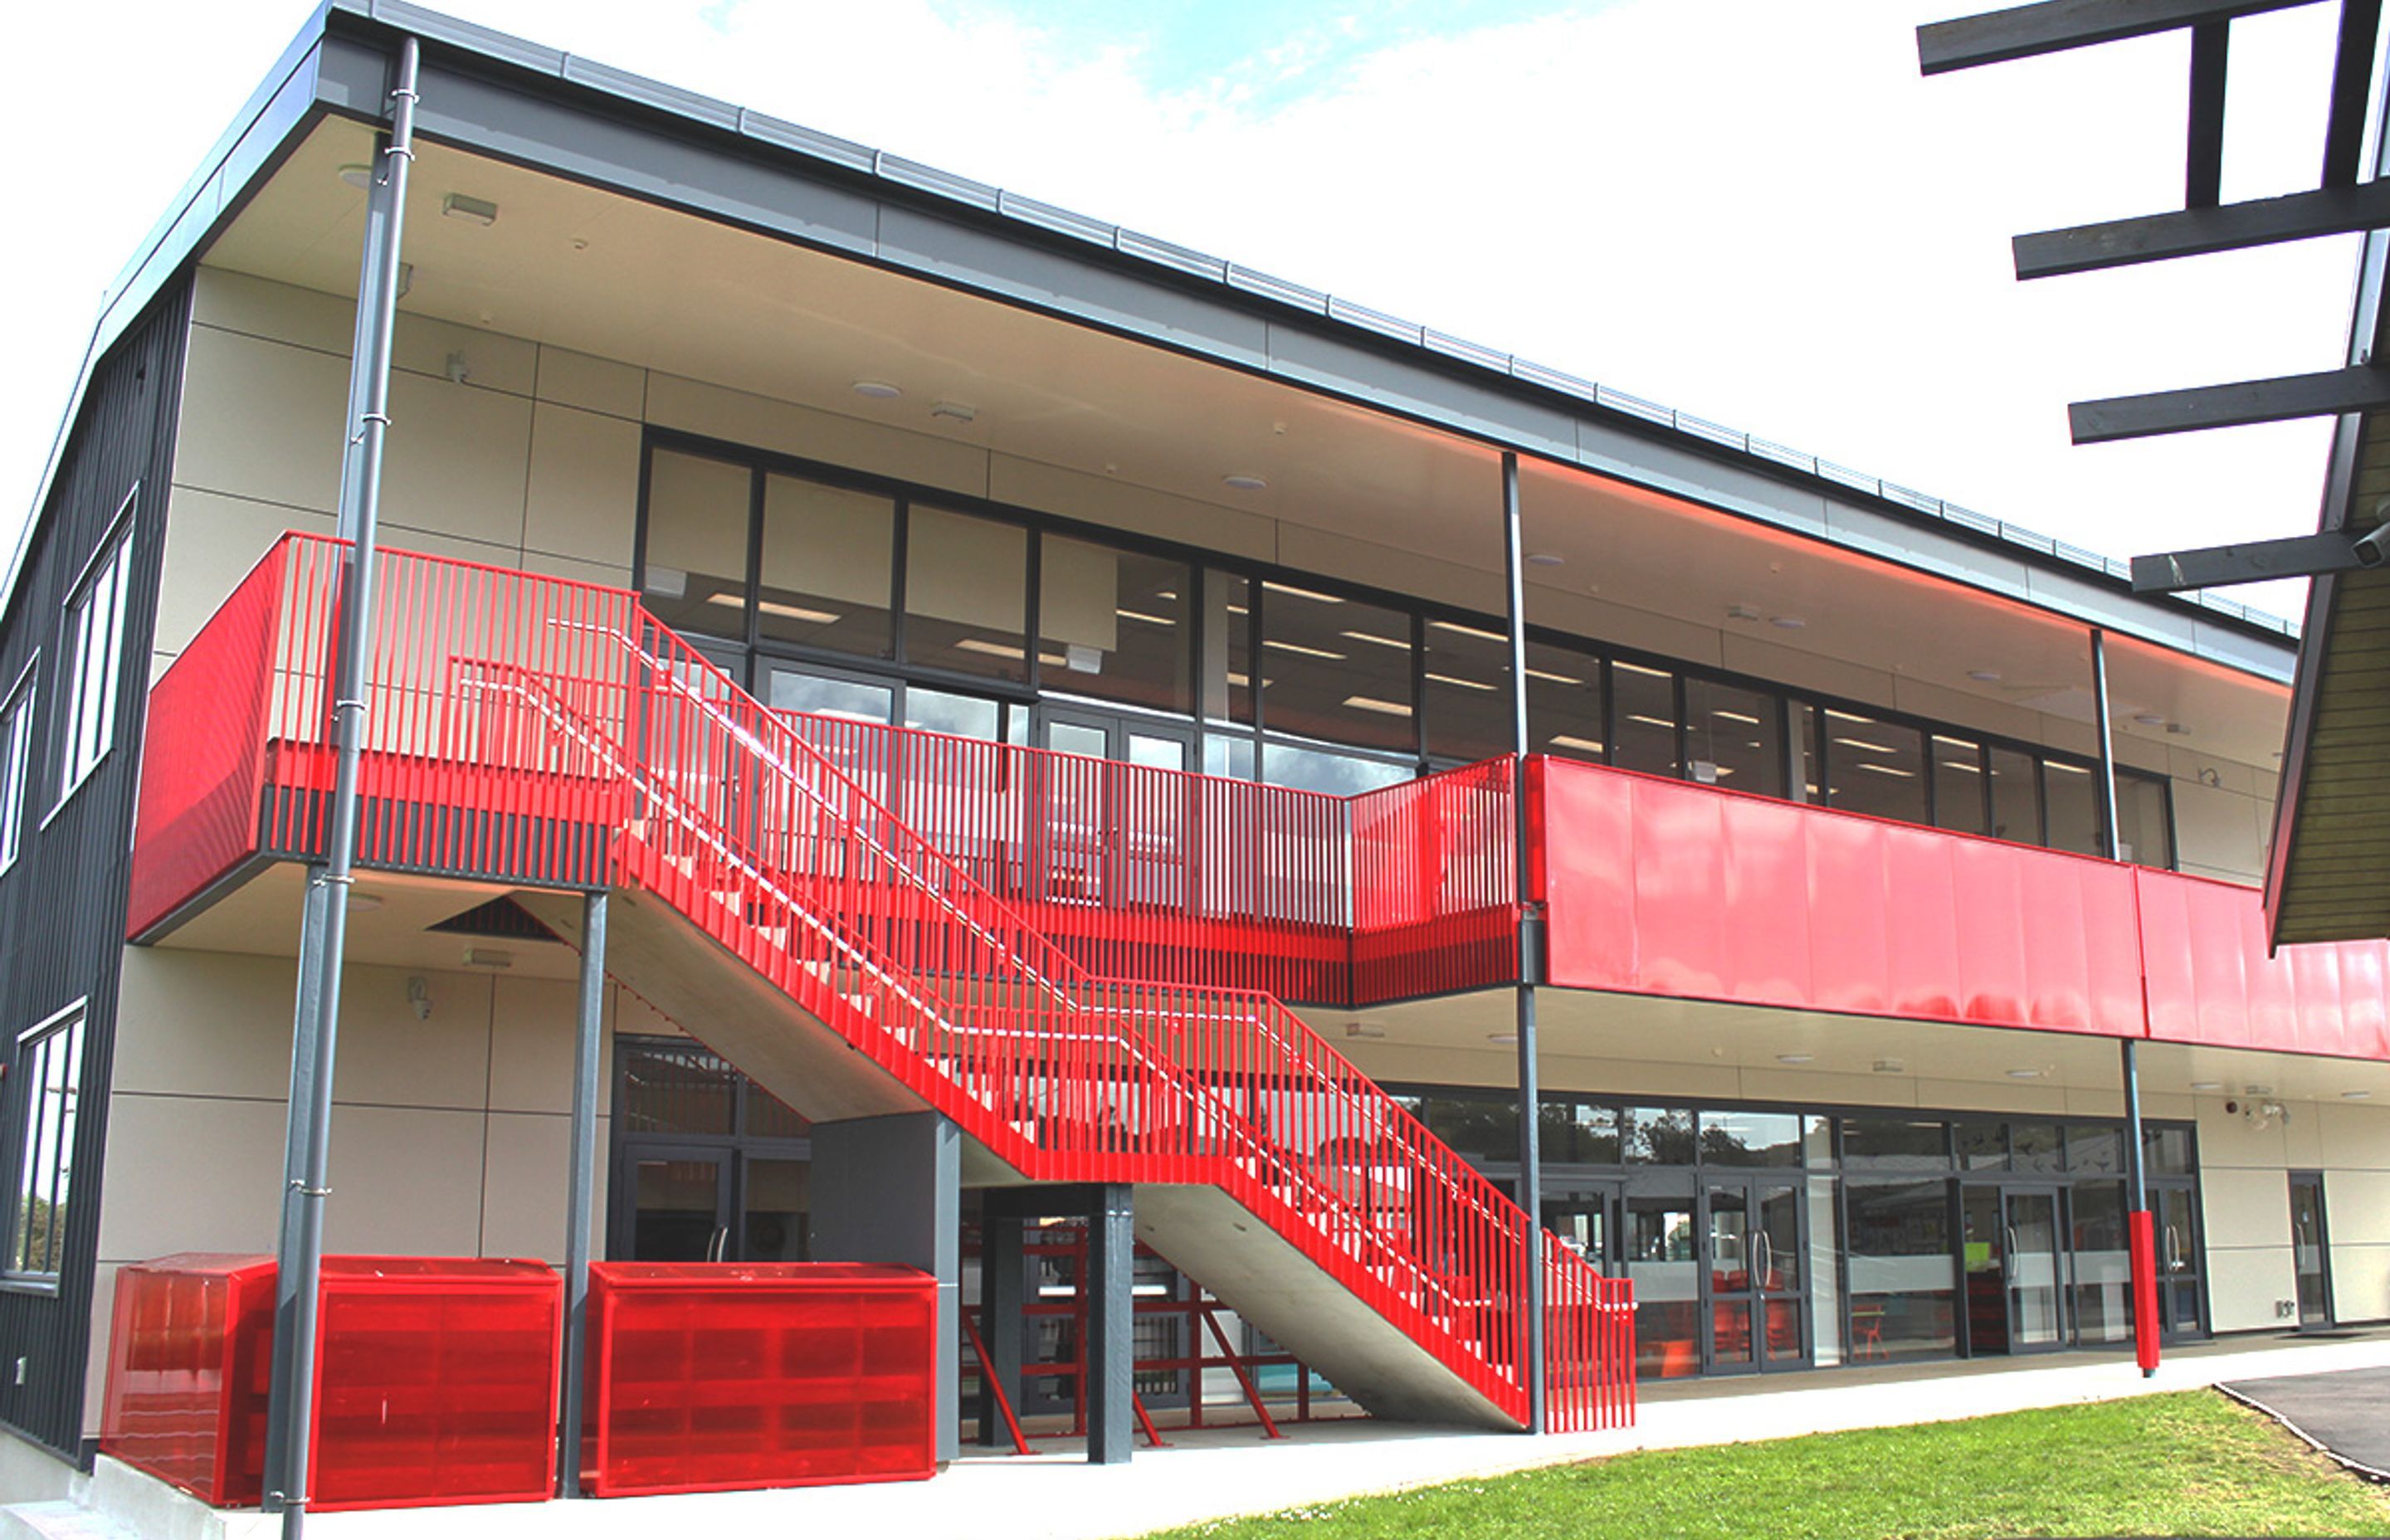 Manurewa East Primary School